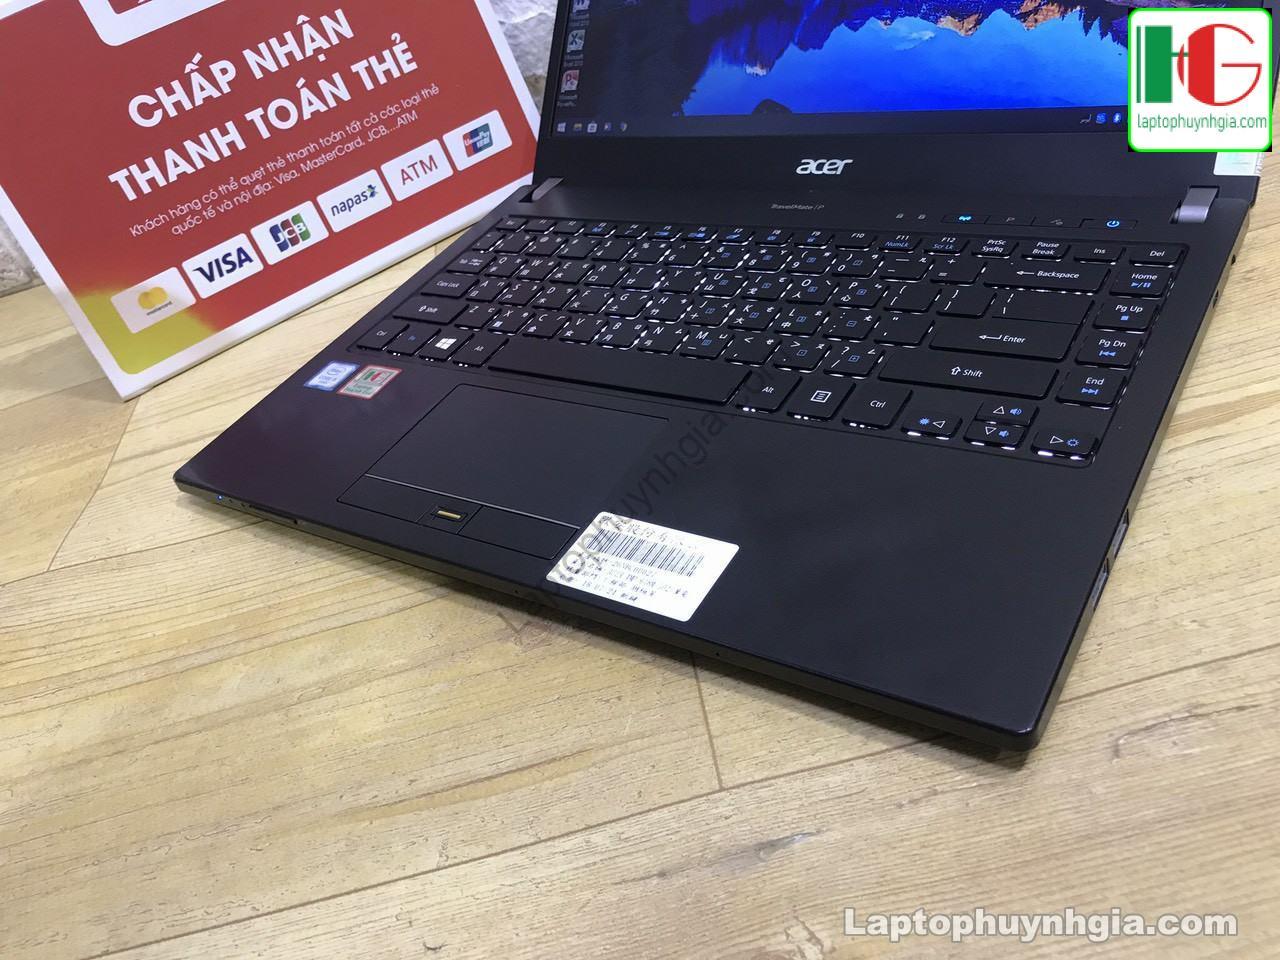 Laptop Acer P658 I5 6200u 4g Hdd 500g Lcd 14 Laptopcubinhduong.vn 2